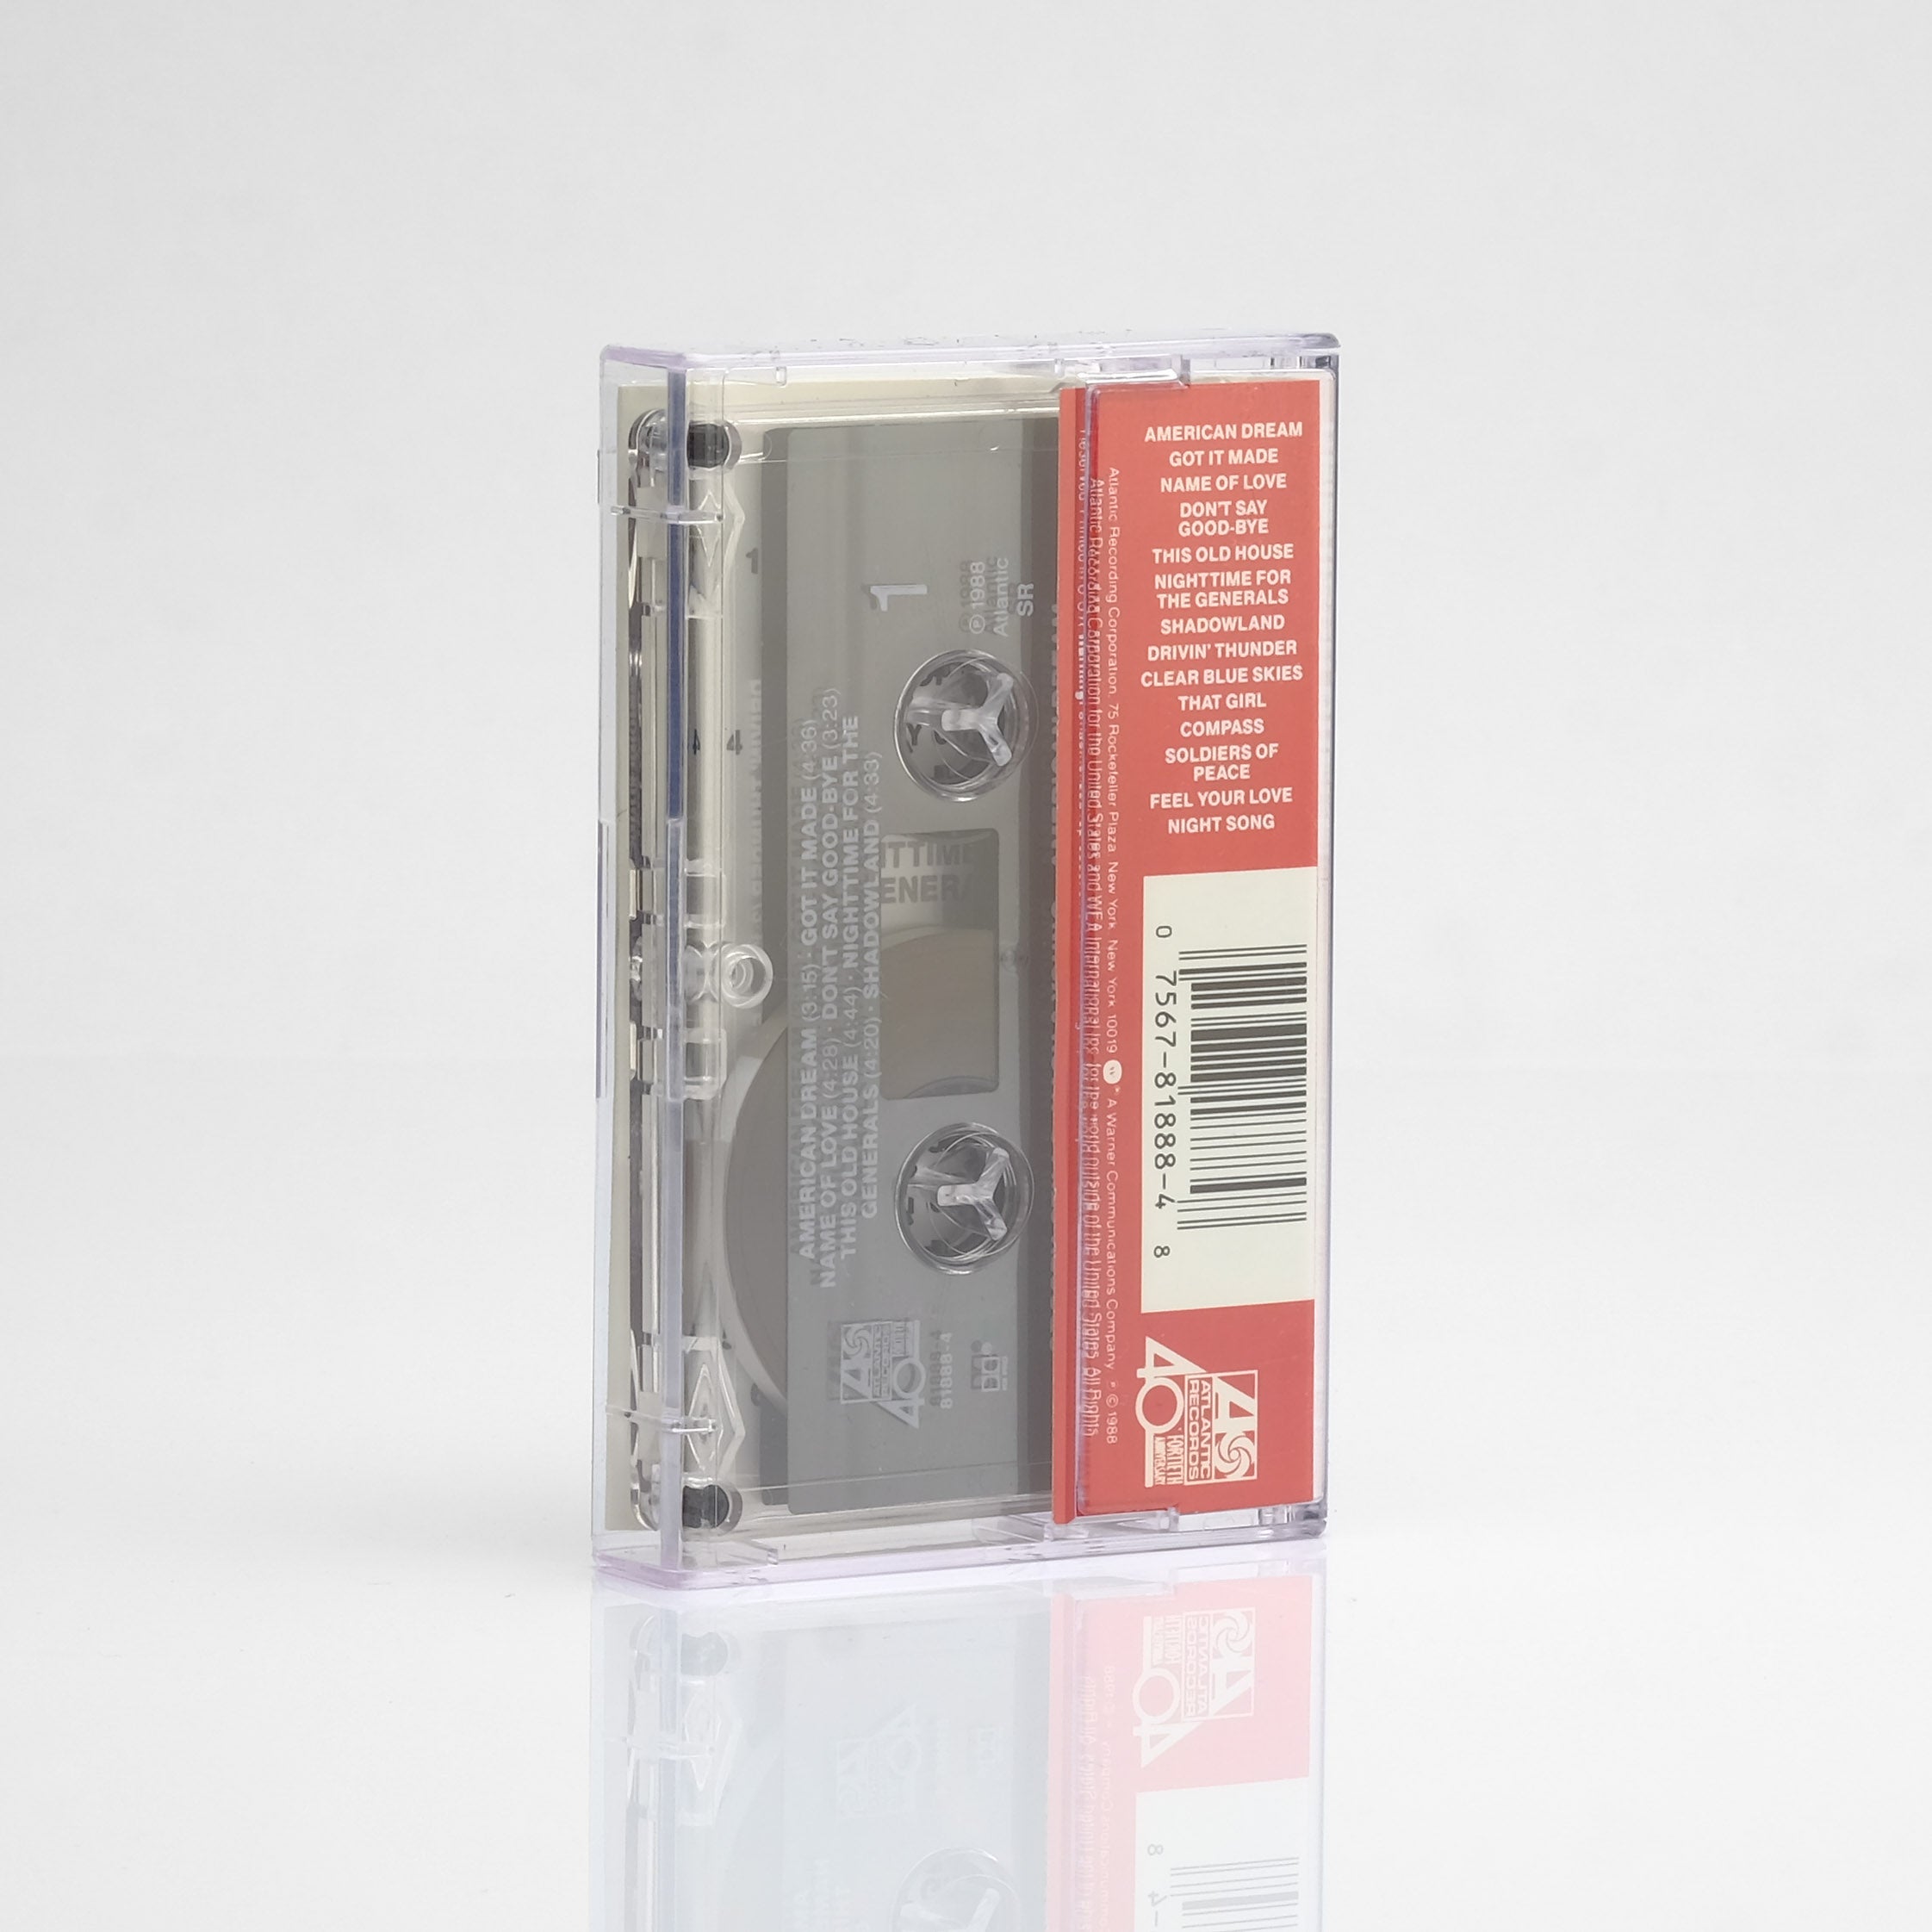 Crosby, Stills, Nash & Young - American Dream Cassette Tape